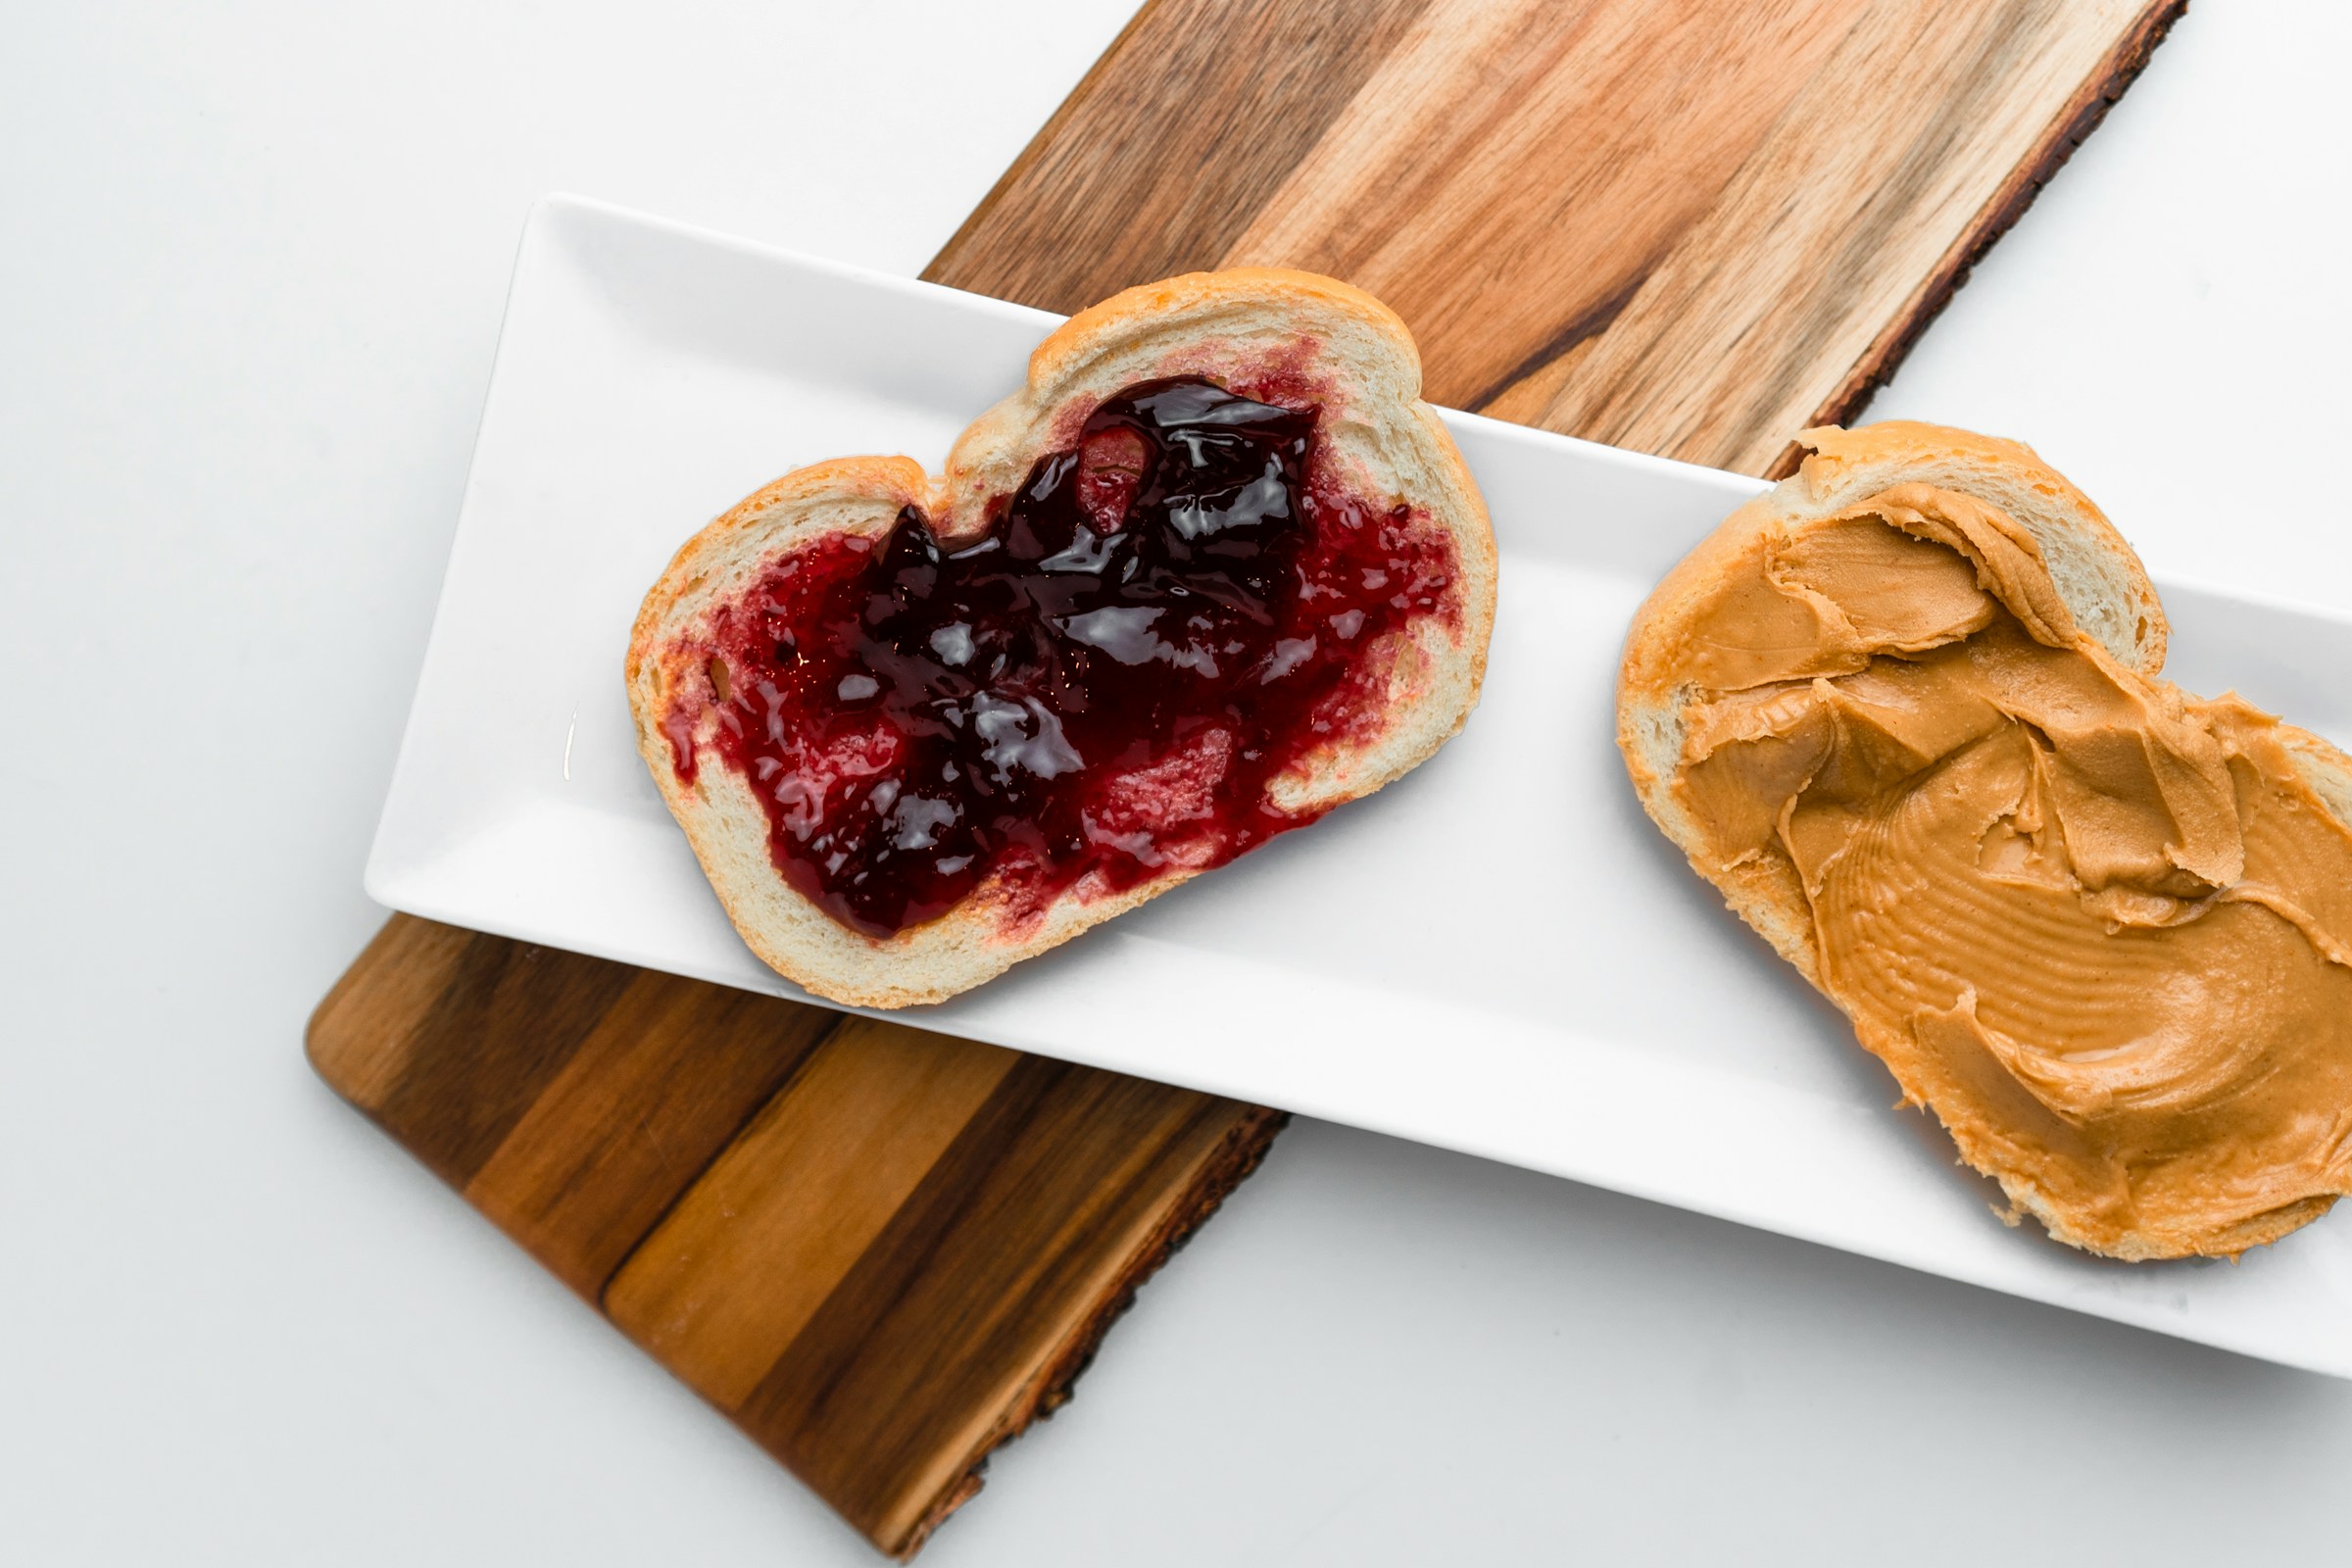 A peanut butter and jelly sandwich | Source: Unsplash